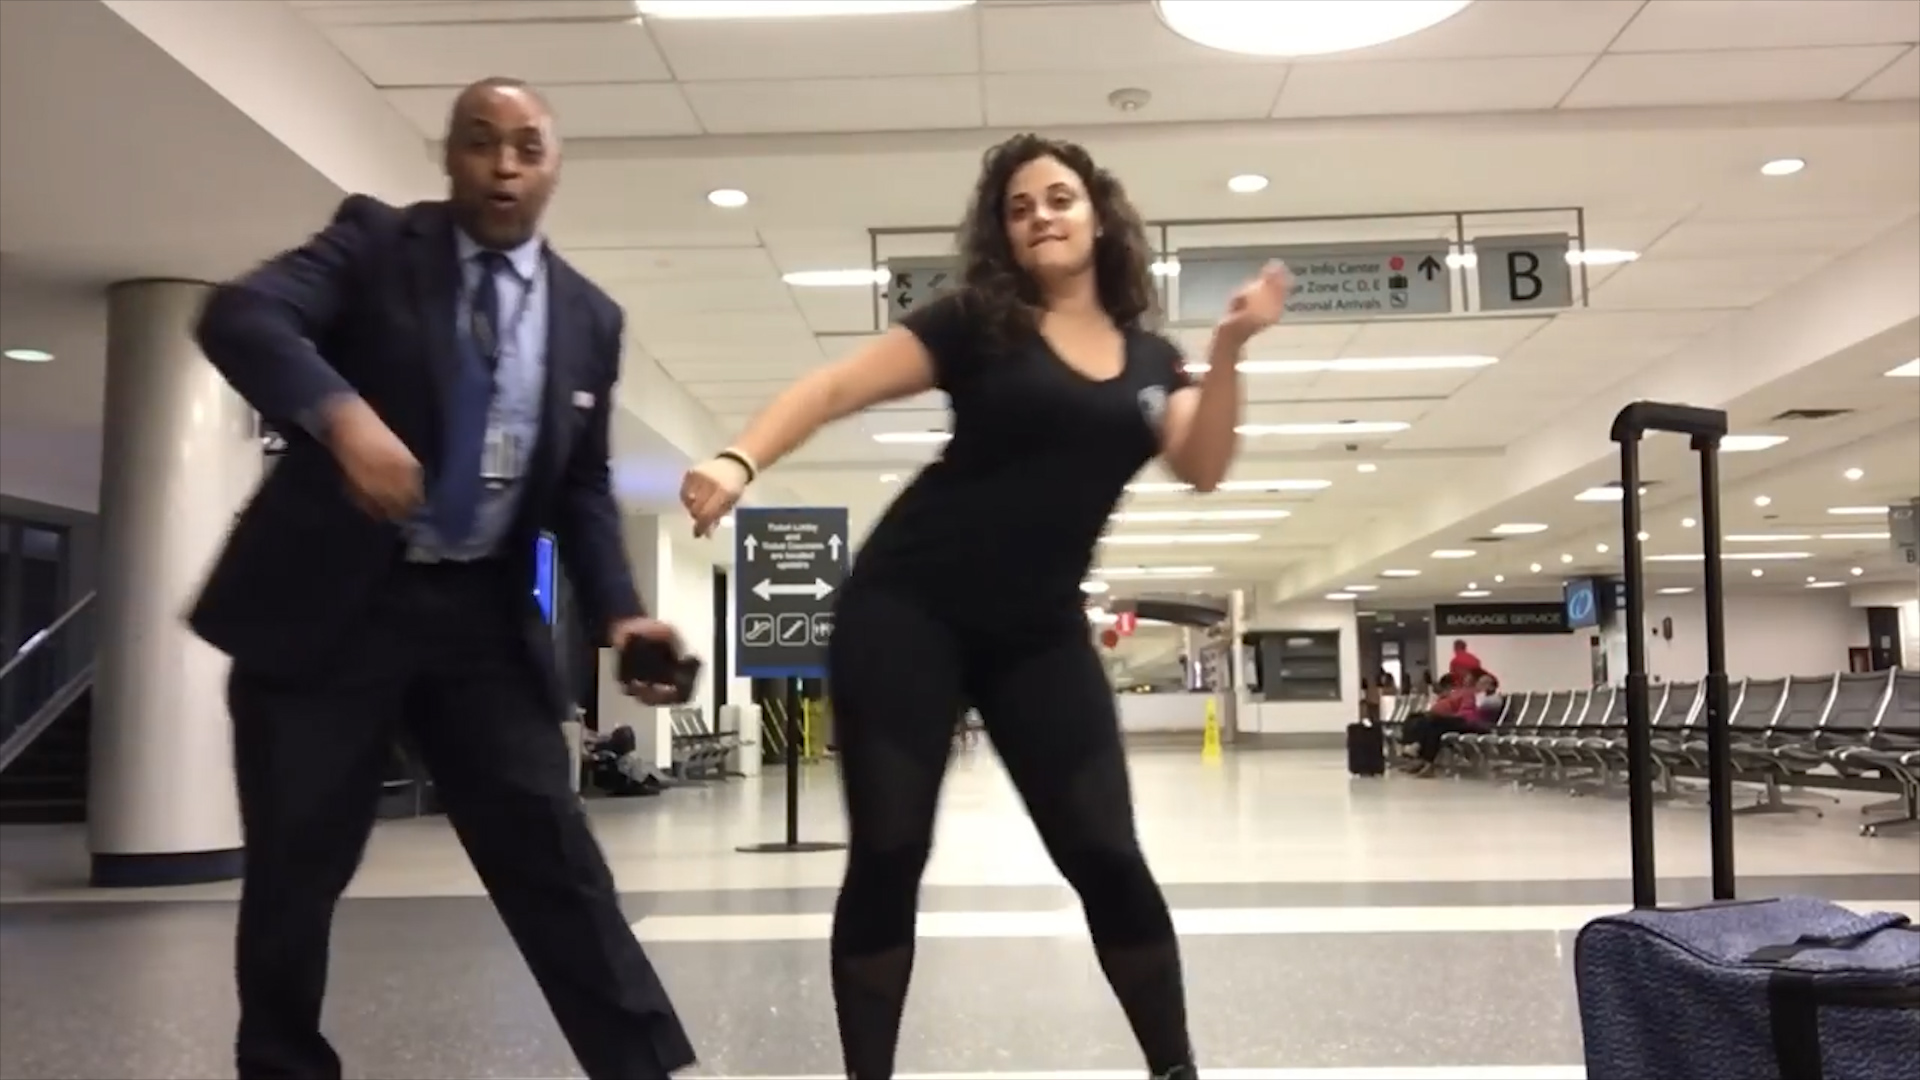 Woman stuck. Радрст в аэропорту танец.